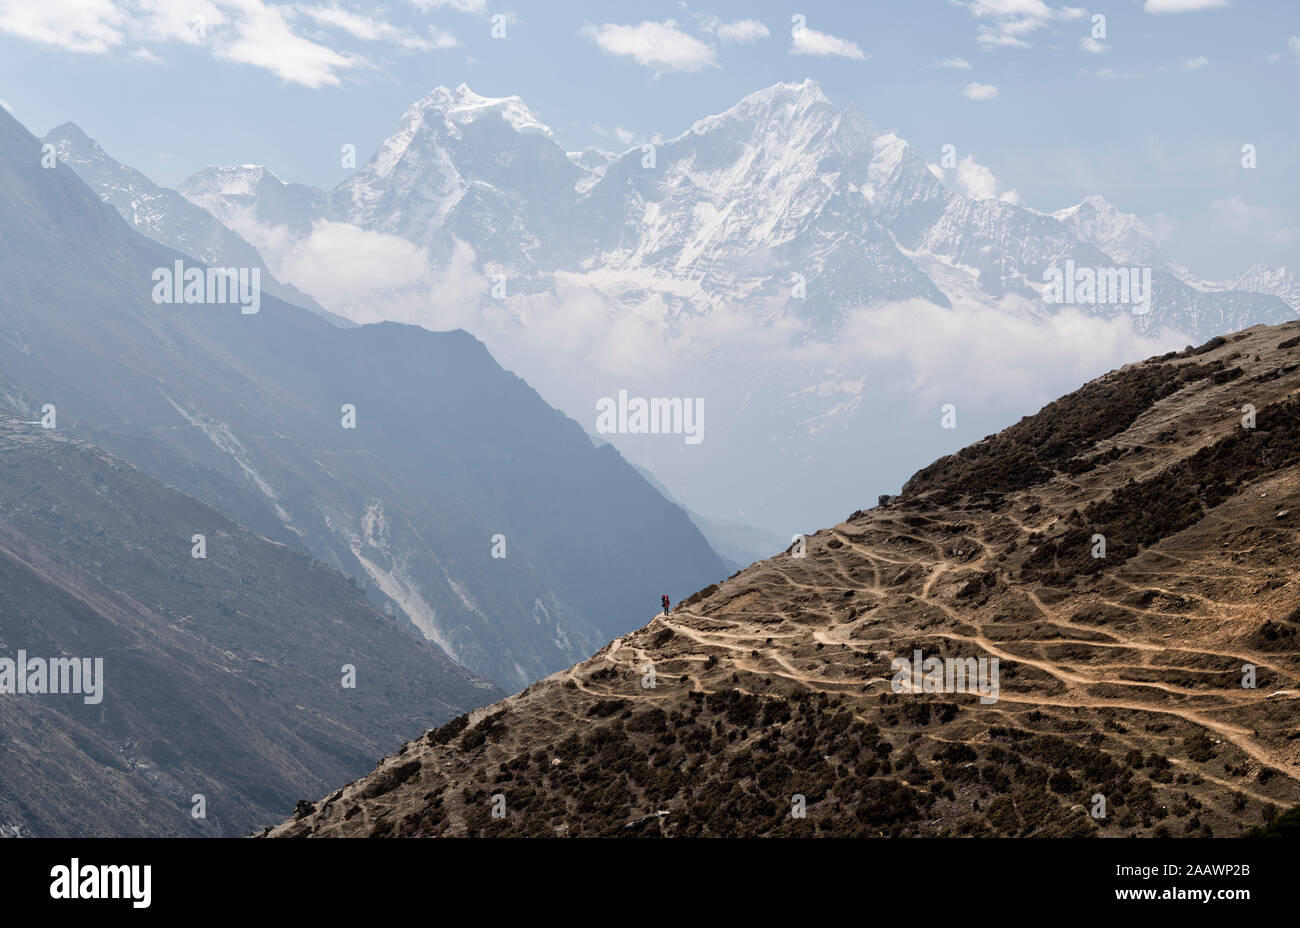 People trekking in the Himalayas near Machhermo, Solo Khumbu, Nepal Stock Photo